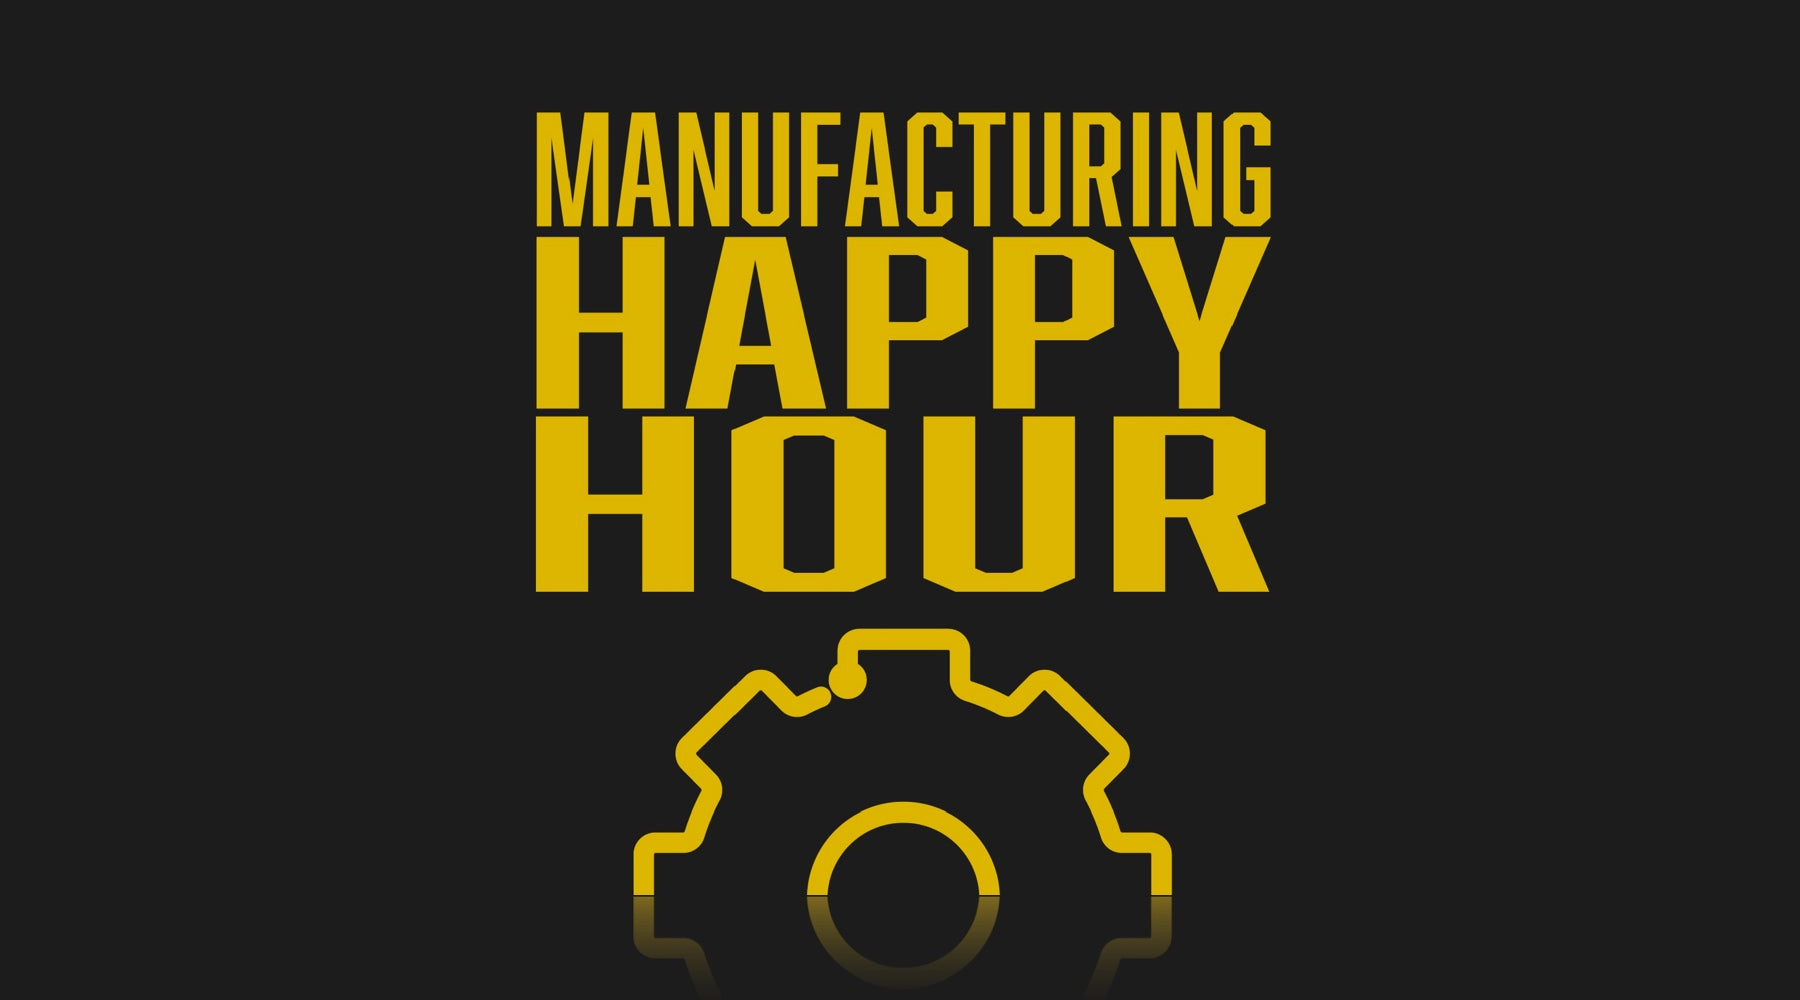 Manufacturing Happy Hour logo.jpg